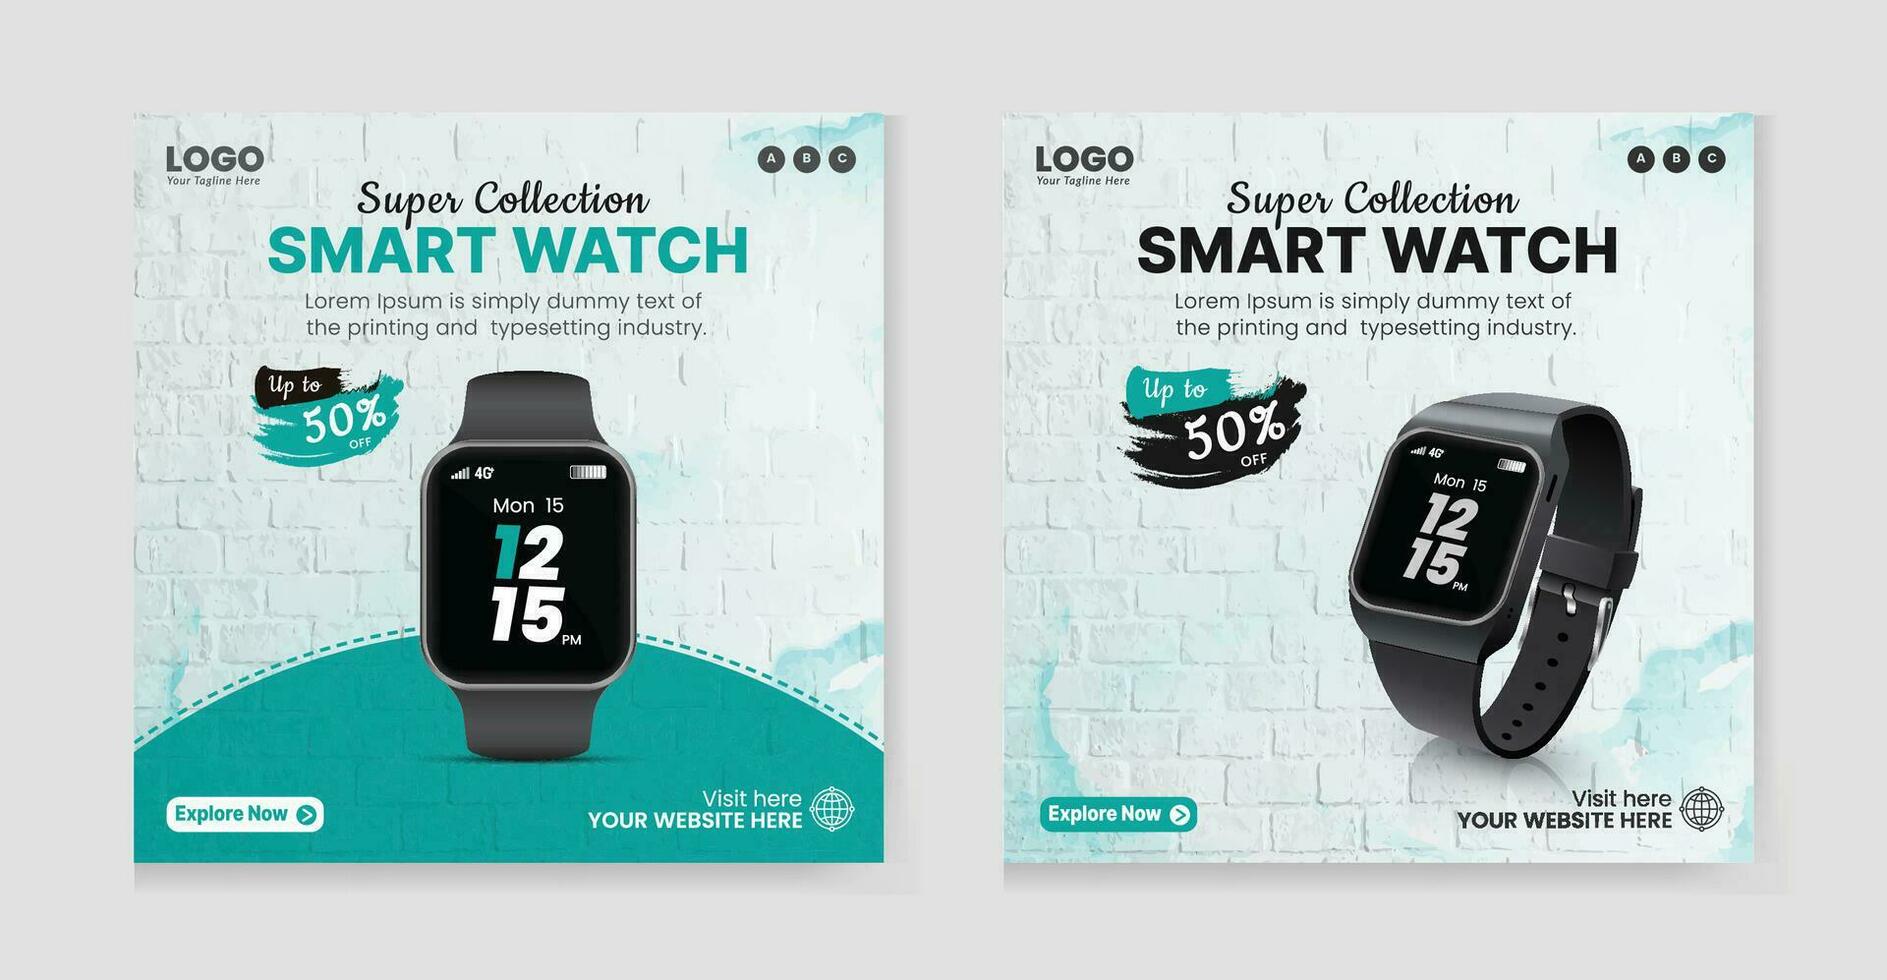 Smart watch banner social media post design template, ads banner template vector